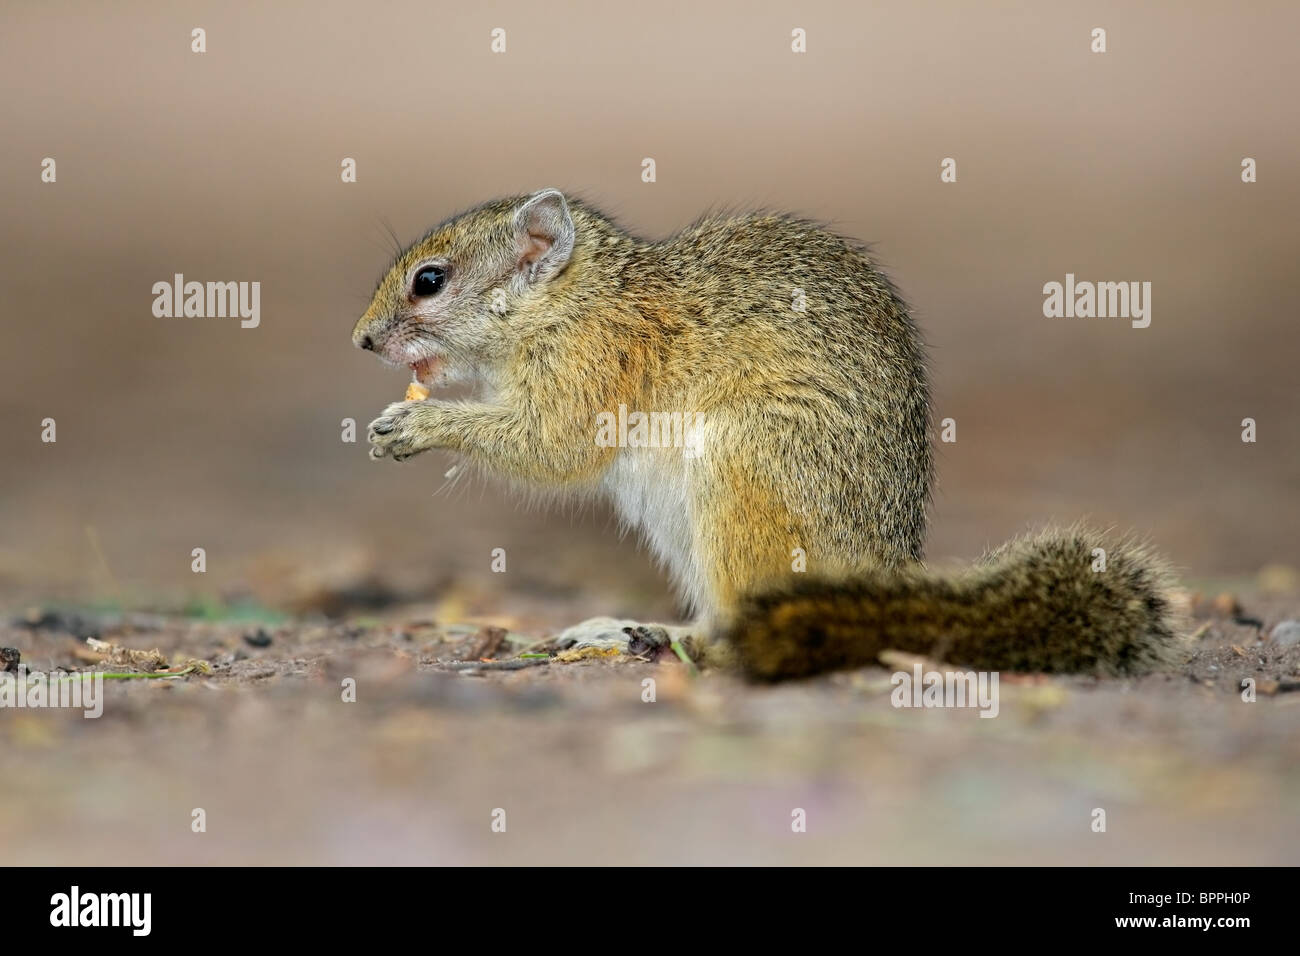 Close-up of a feeding tree squirrel (Paraxerus cepapi), South Africa Stock Photo